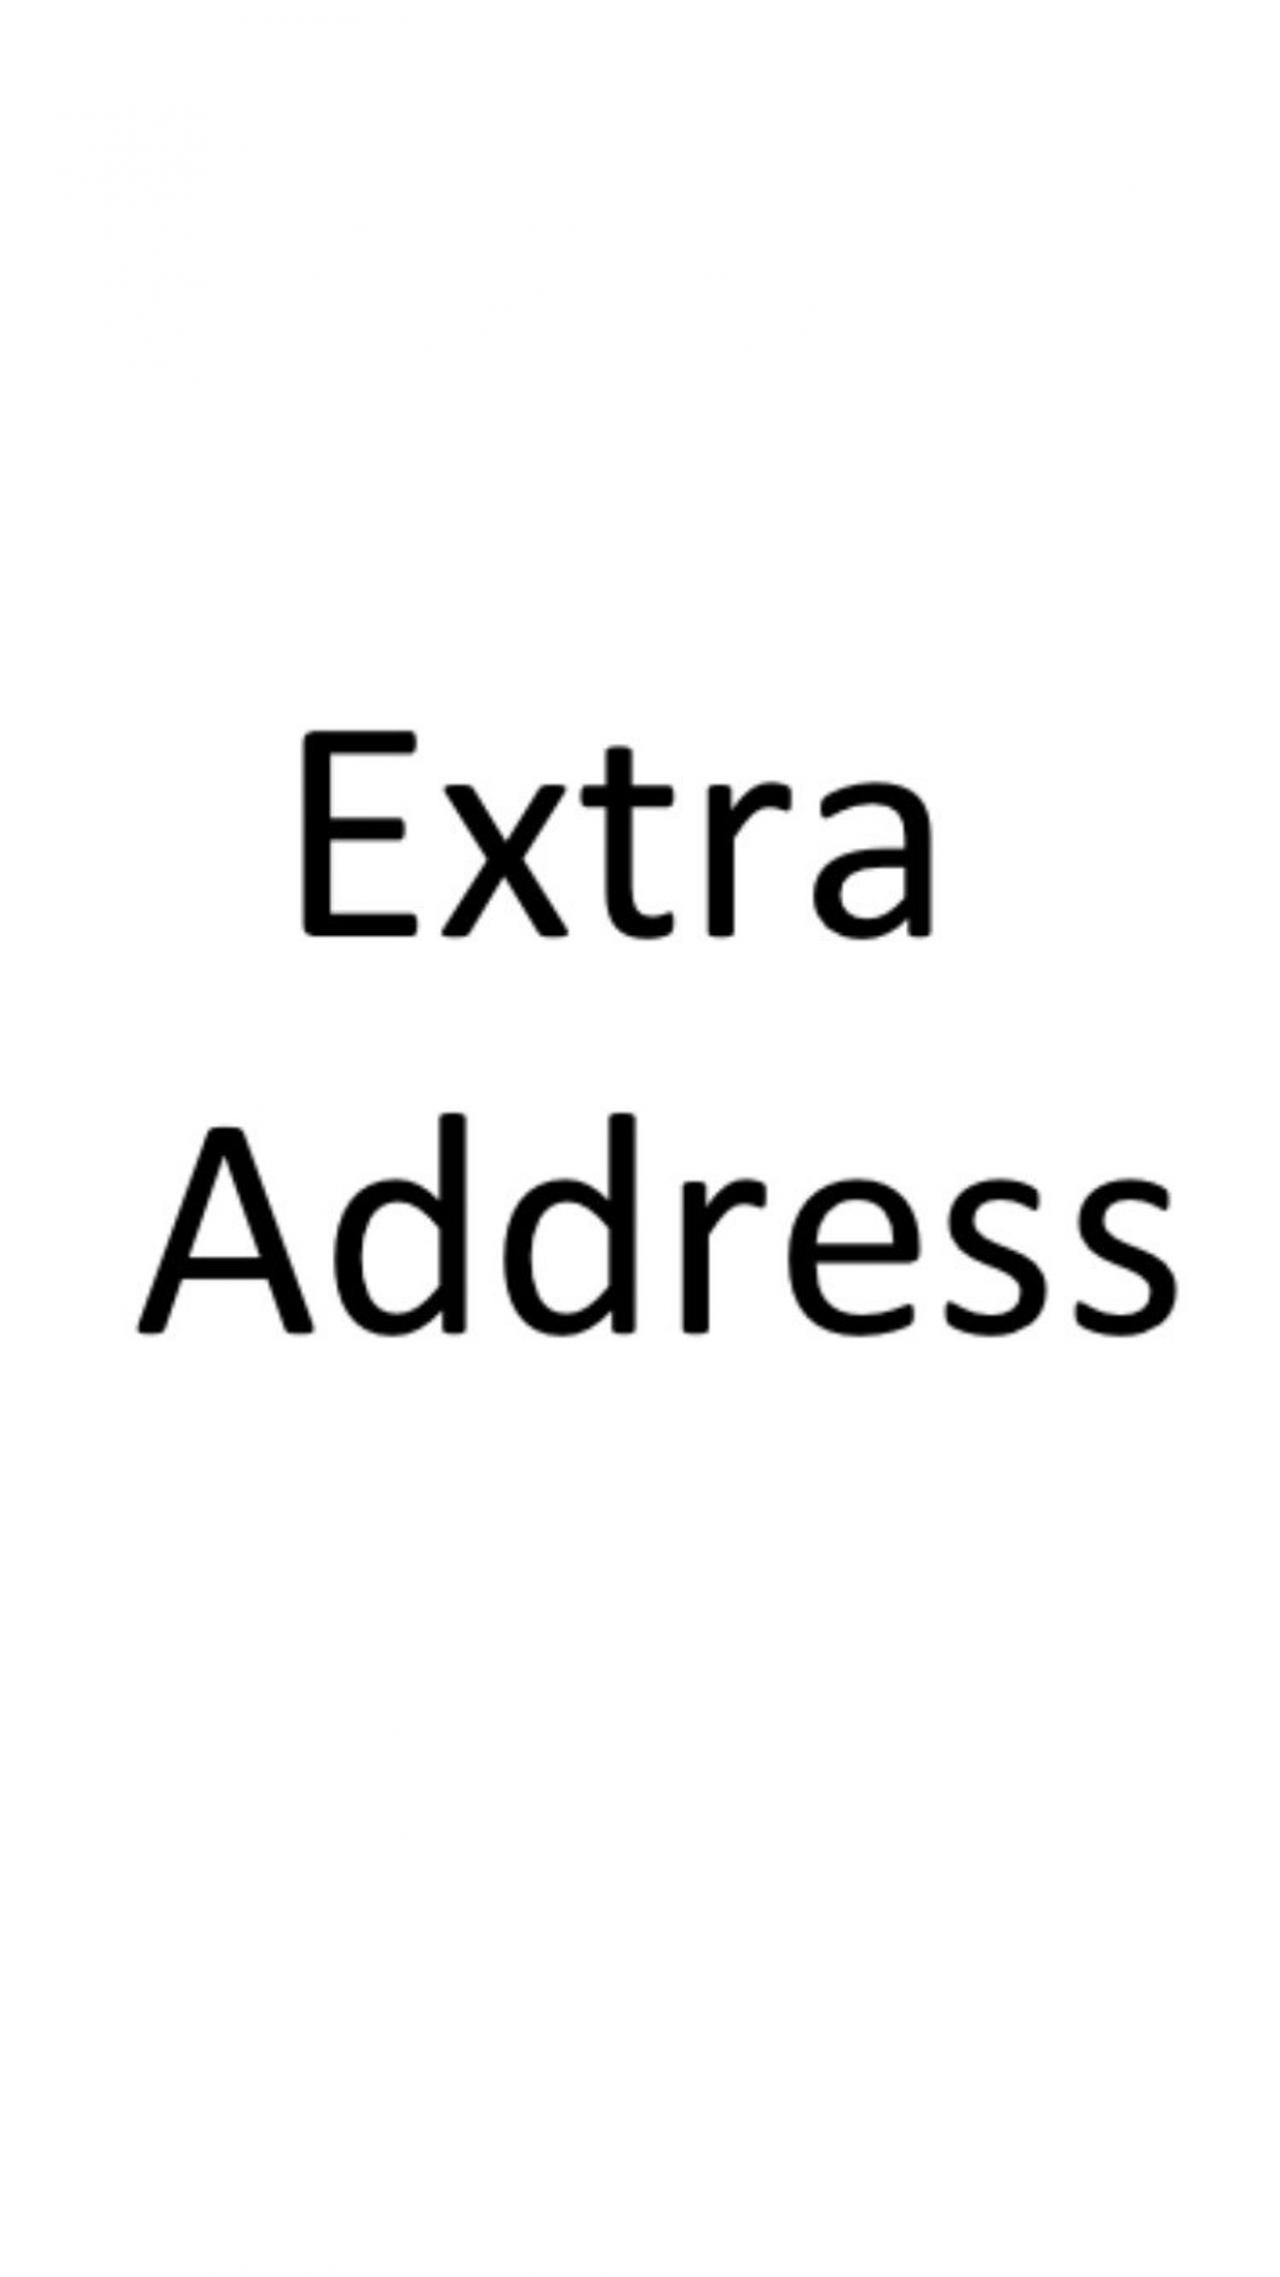 Extra Address